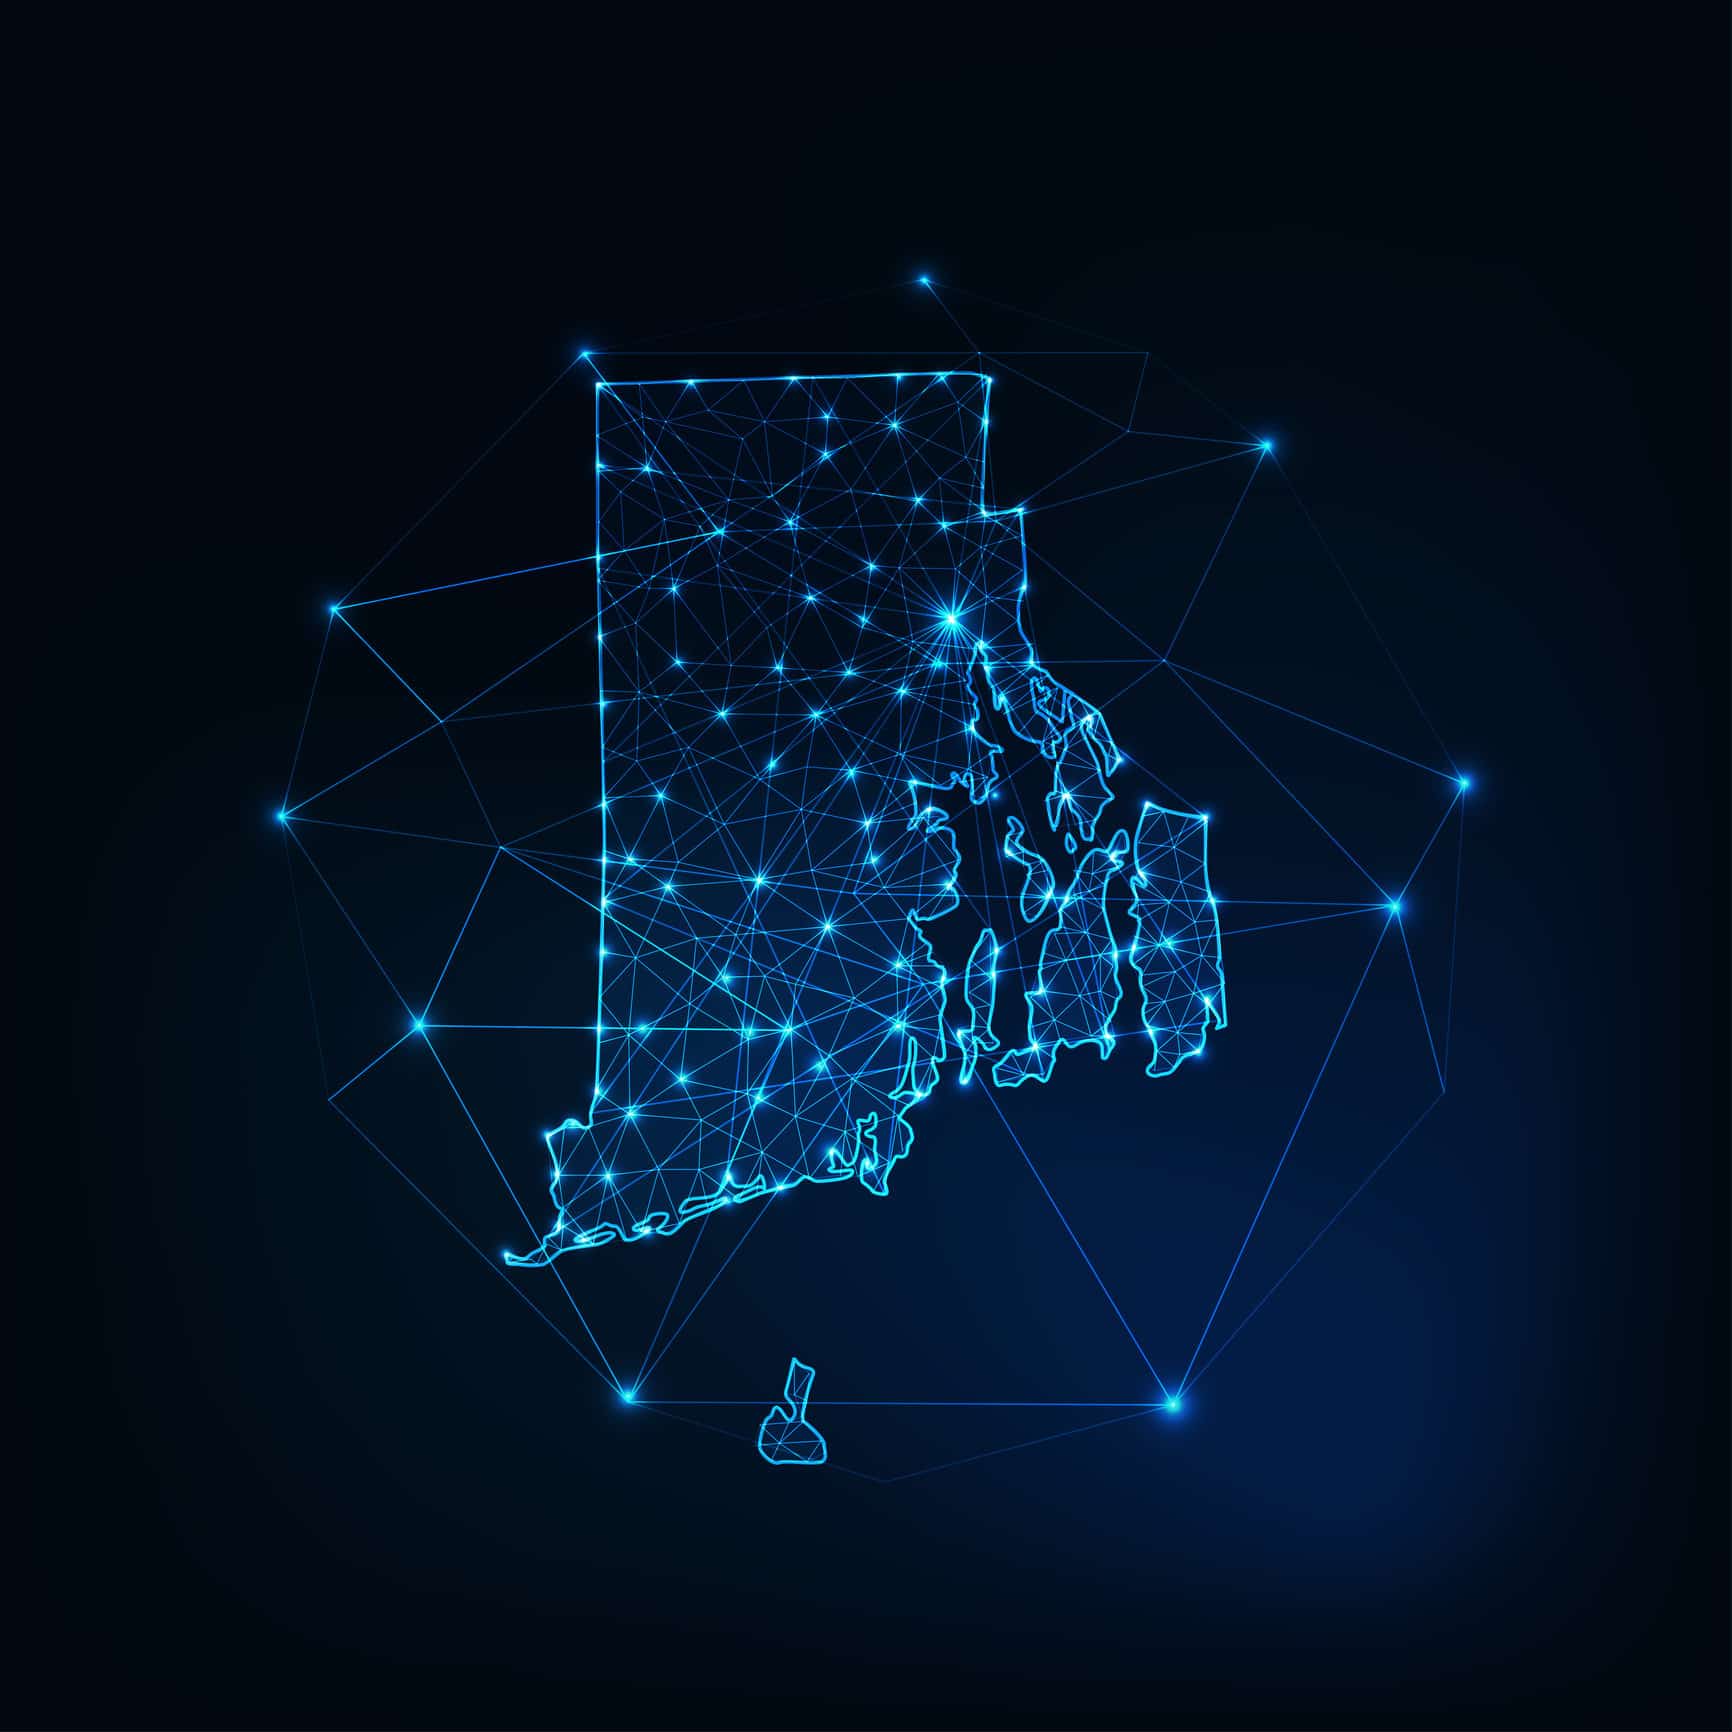 Rhode Island network connection tech map